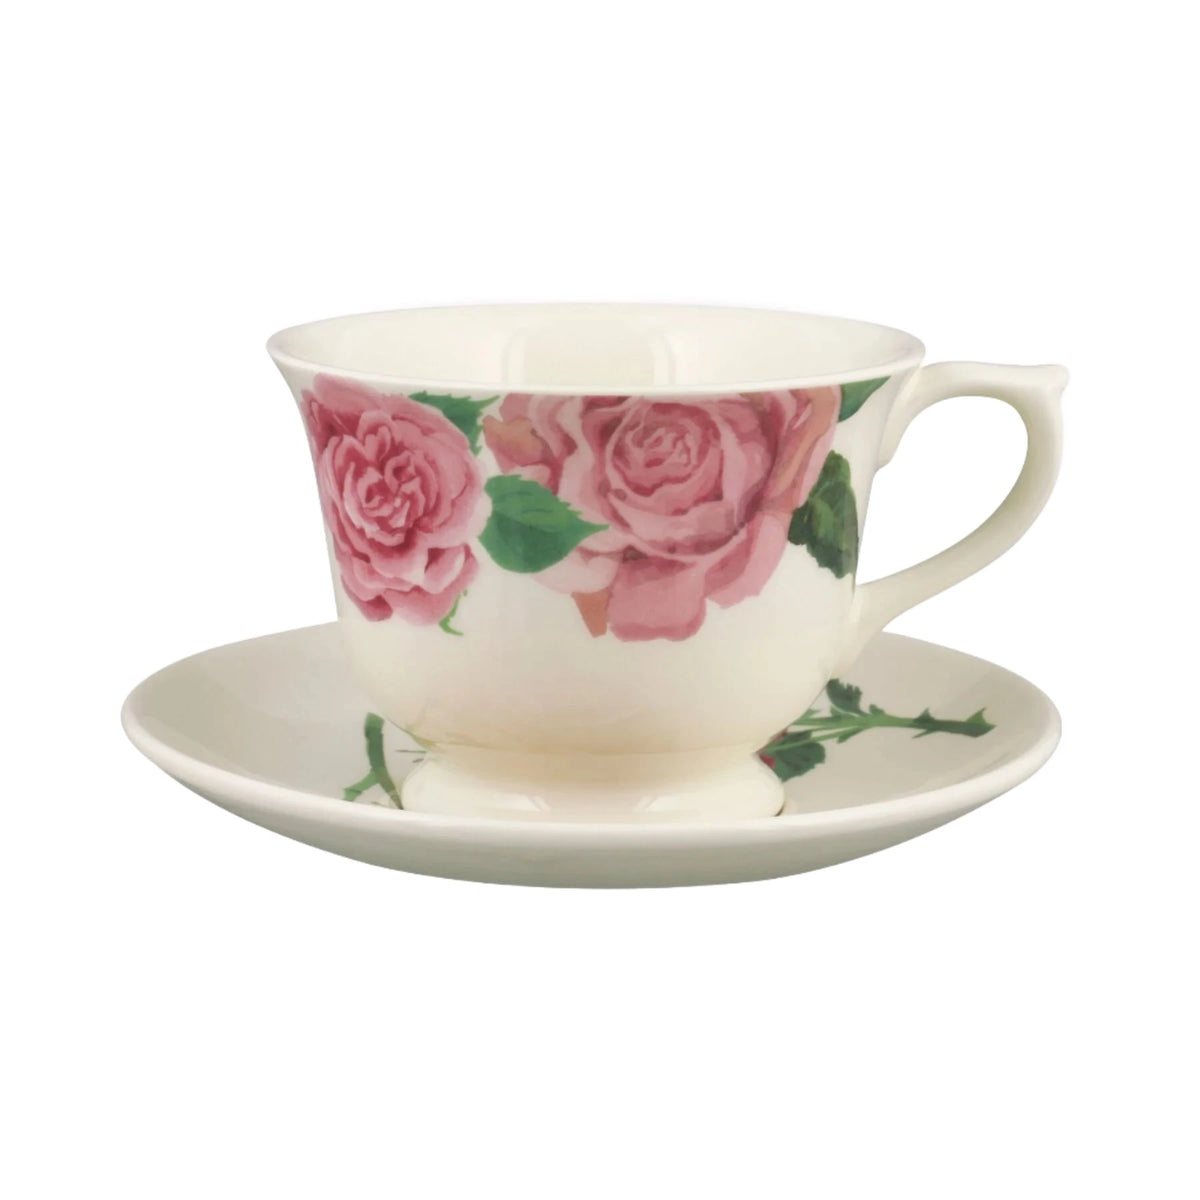 Emma Bridgewater 30ml Roses All My Life Printed Teacup and Saucer Set